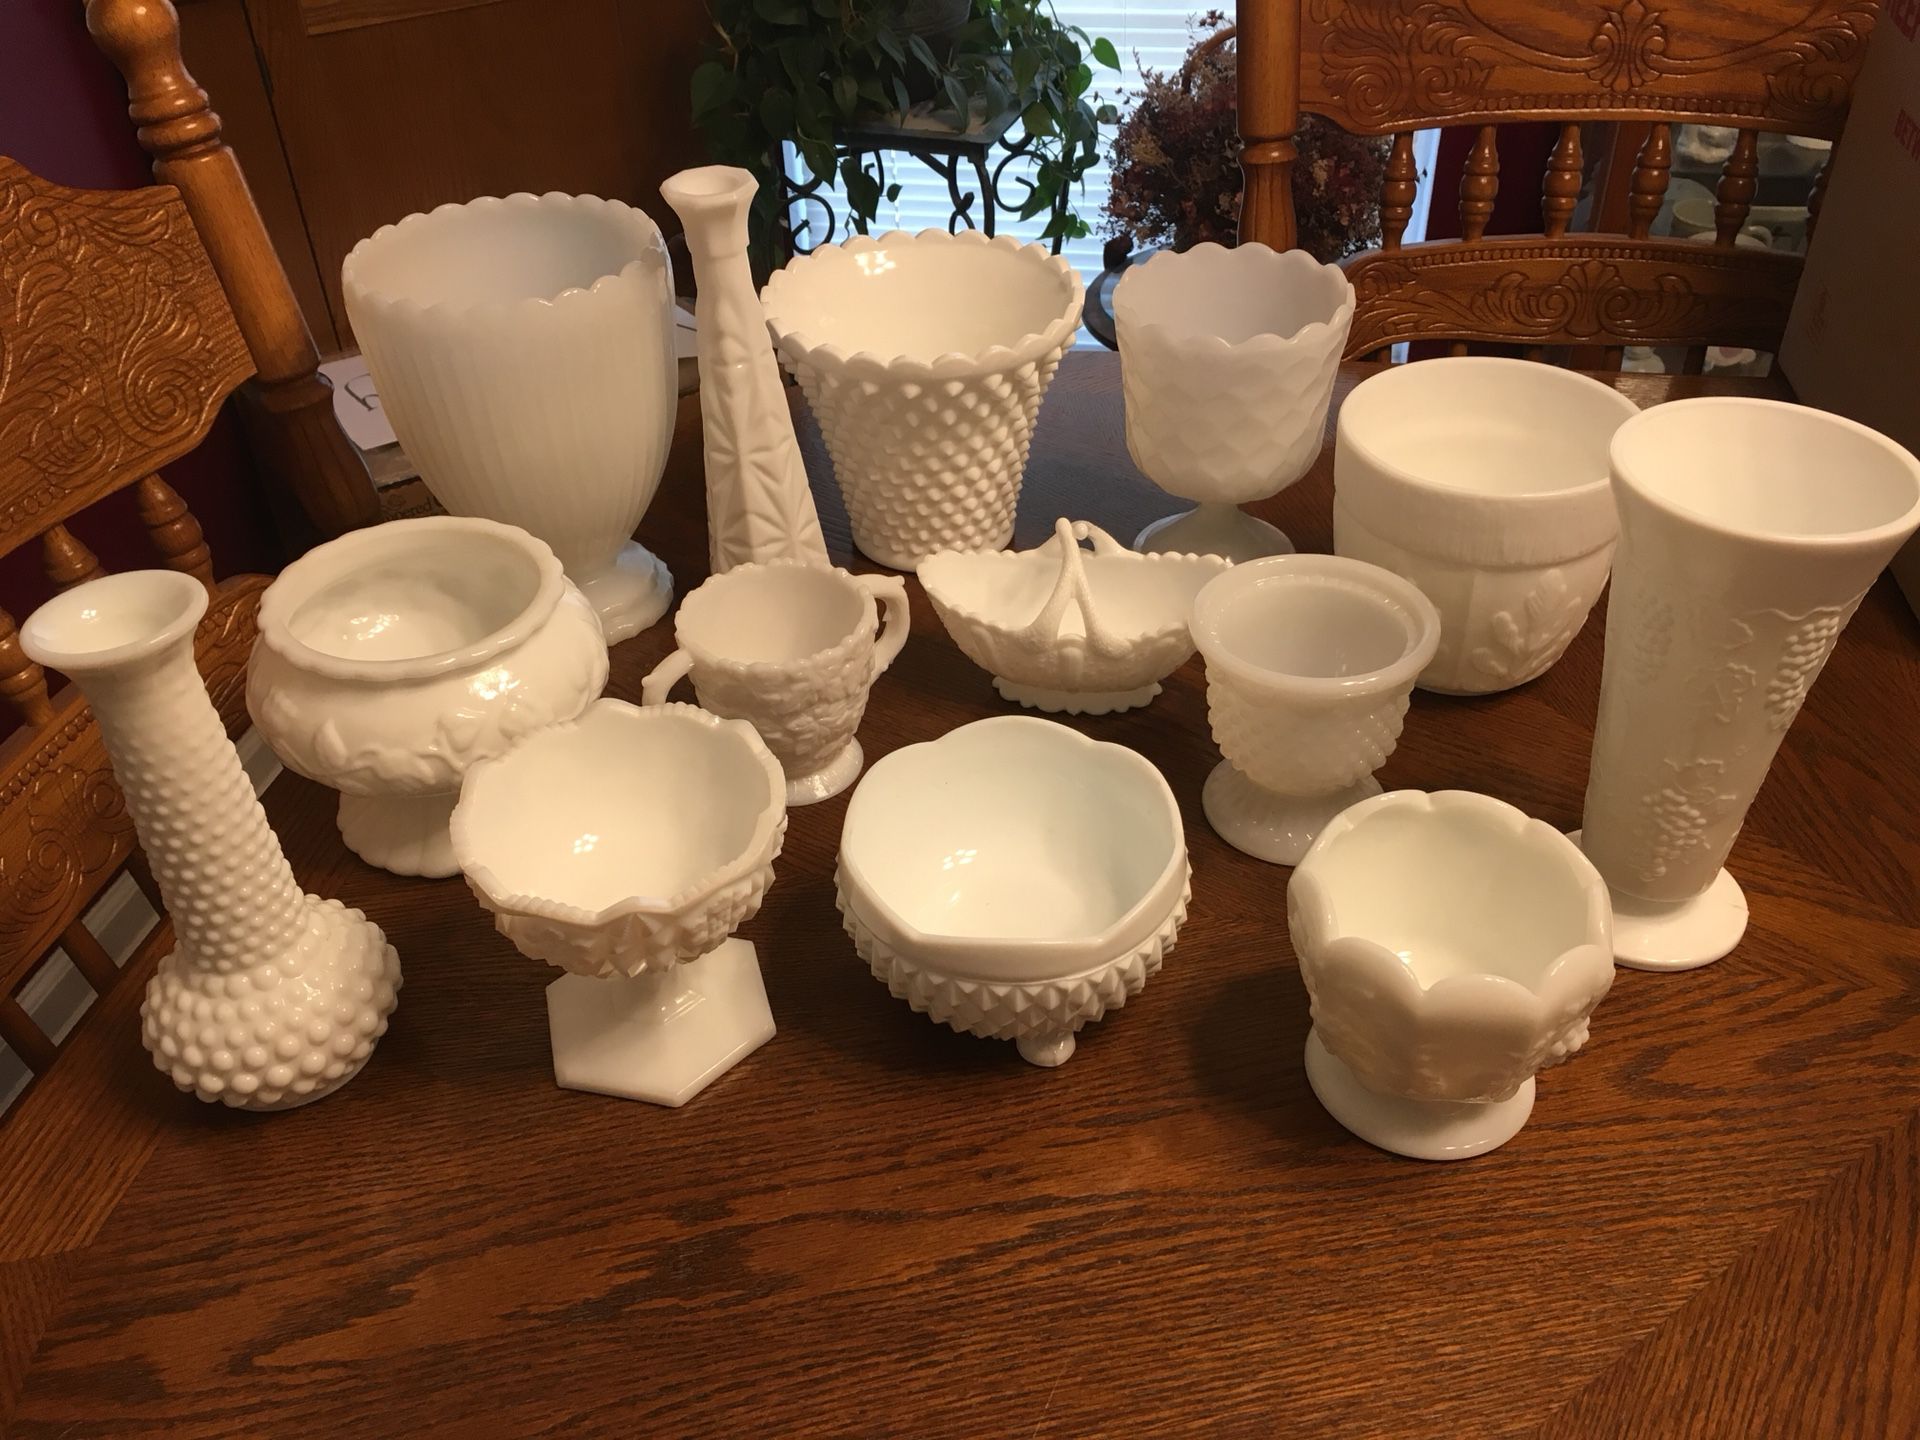 Antique Milk Glass Vases, Planters, Candy Dishes, Etc.